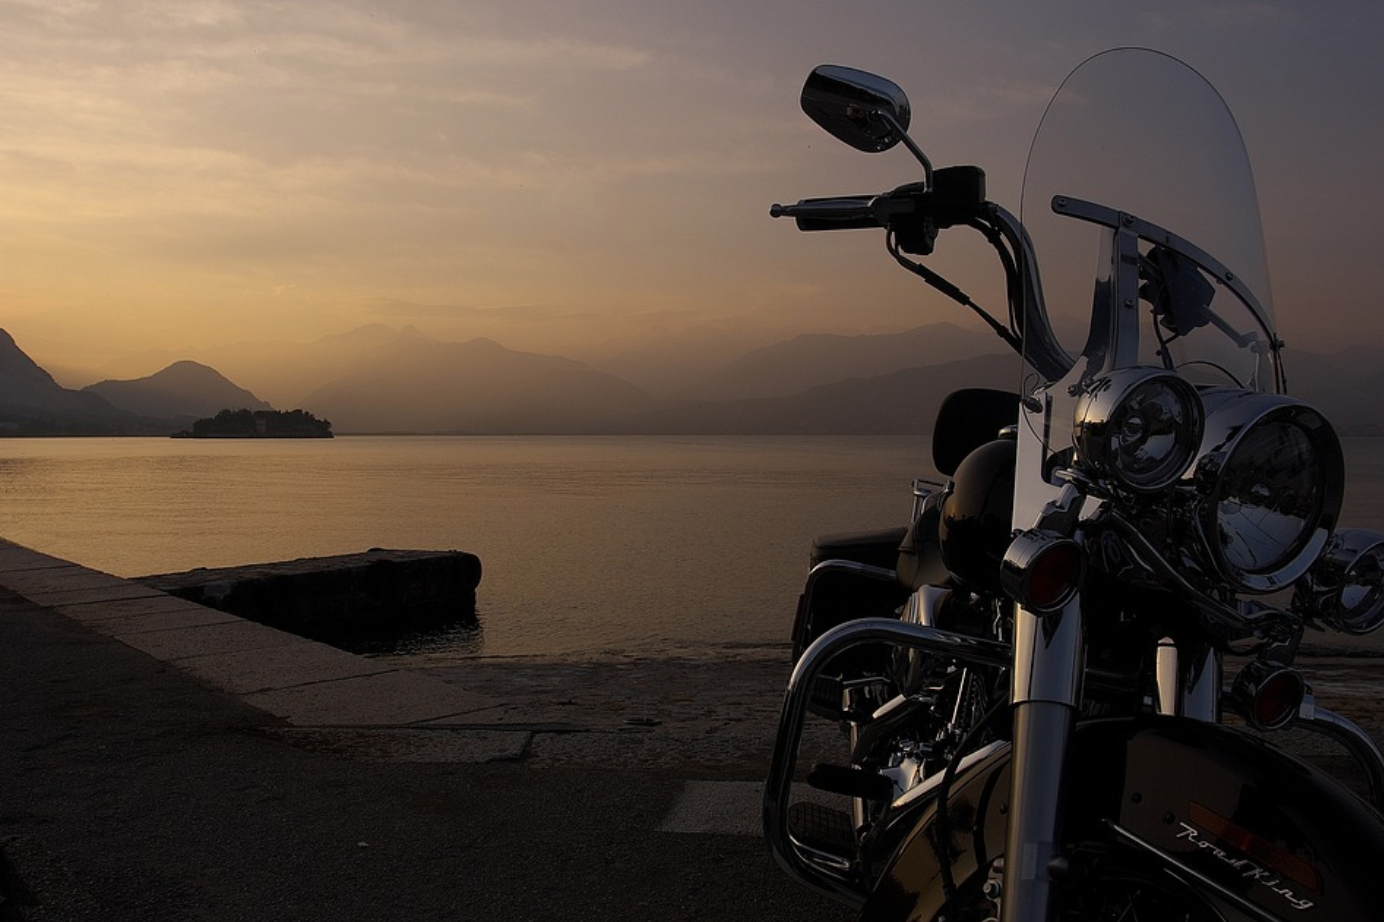 Motorcycle parked by lake; image by Scozzy, via Pixabay.com.